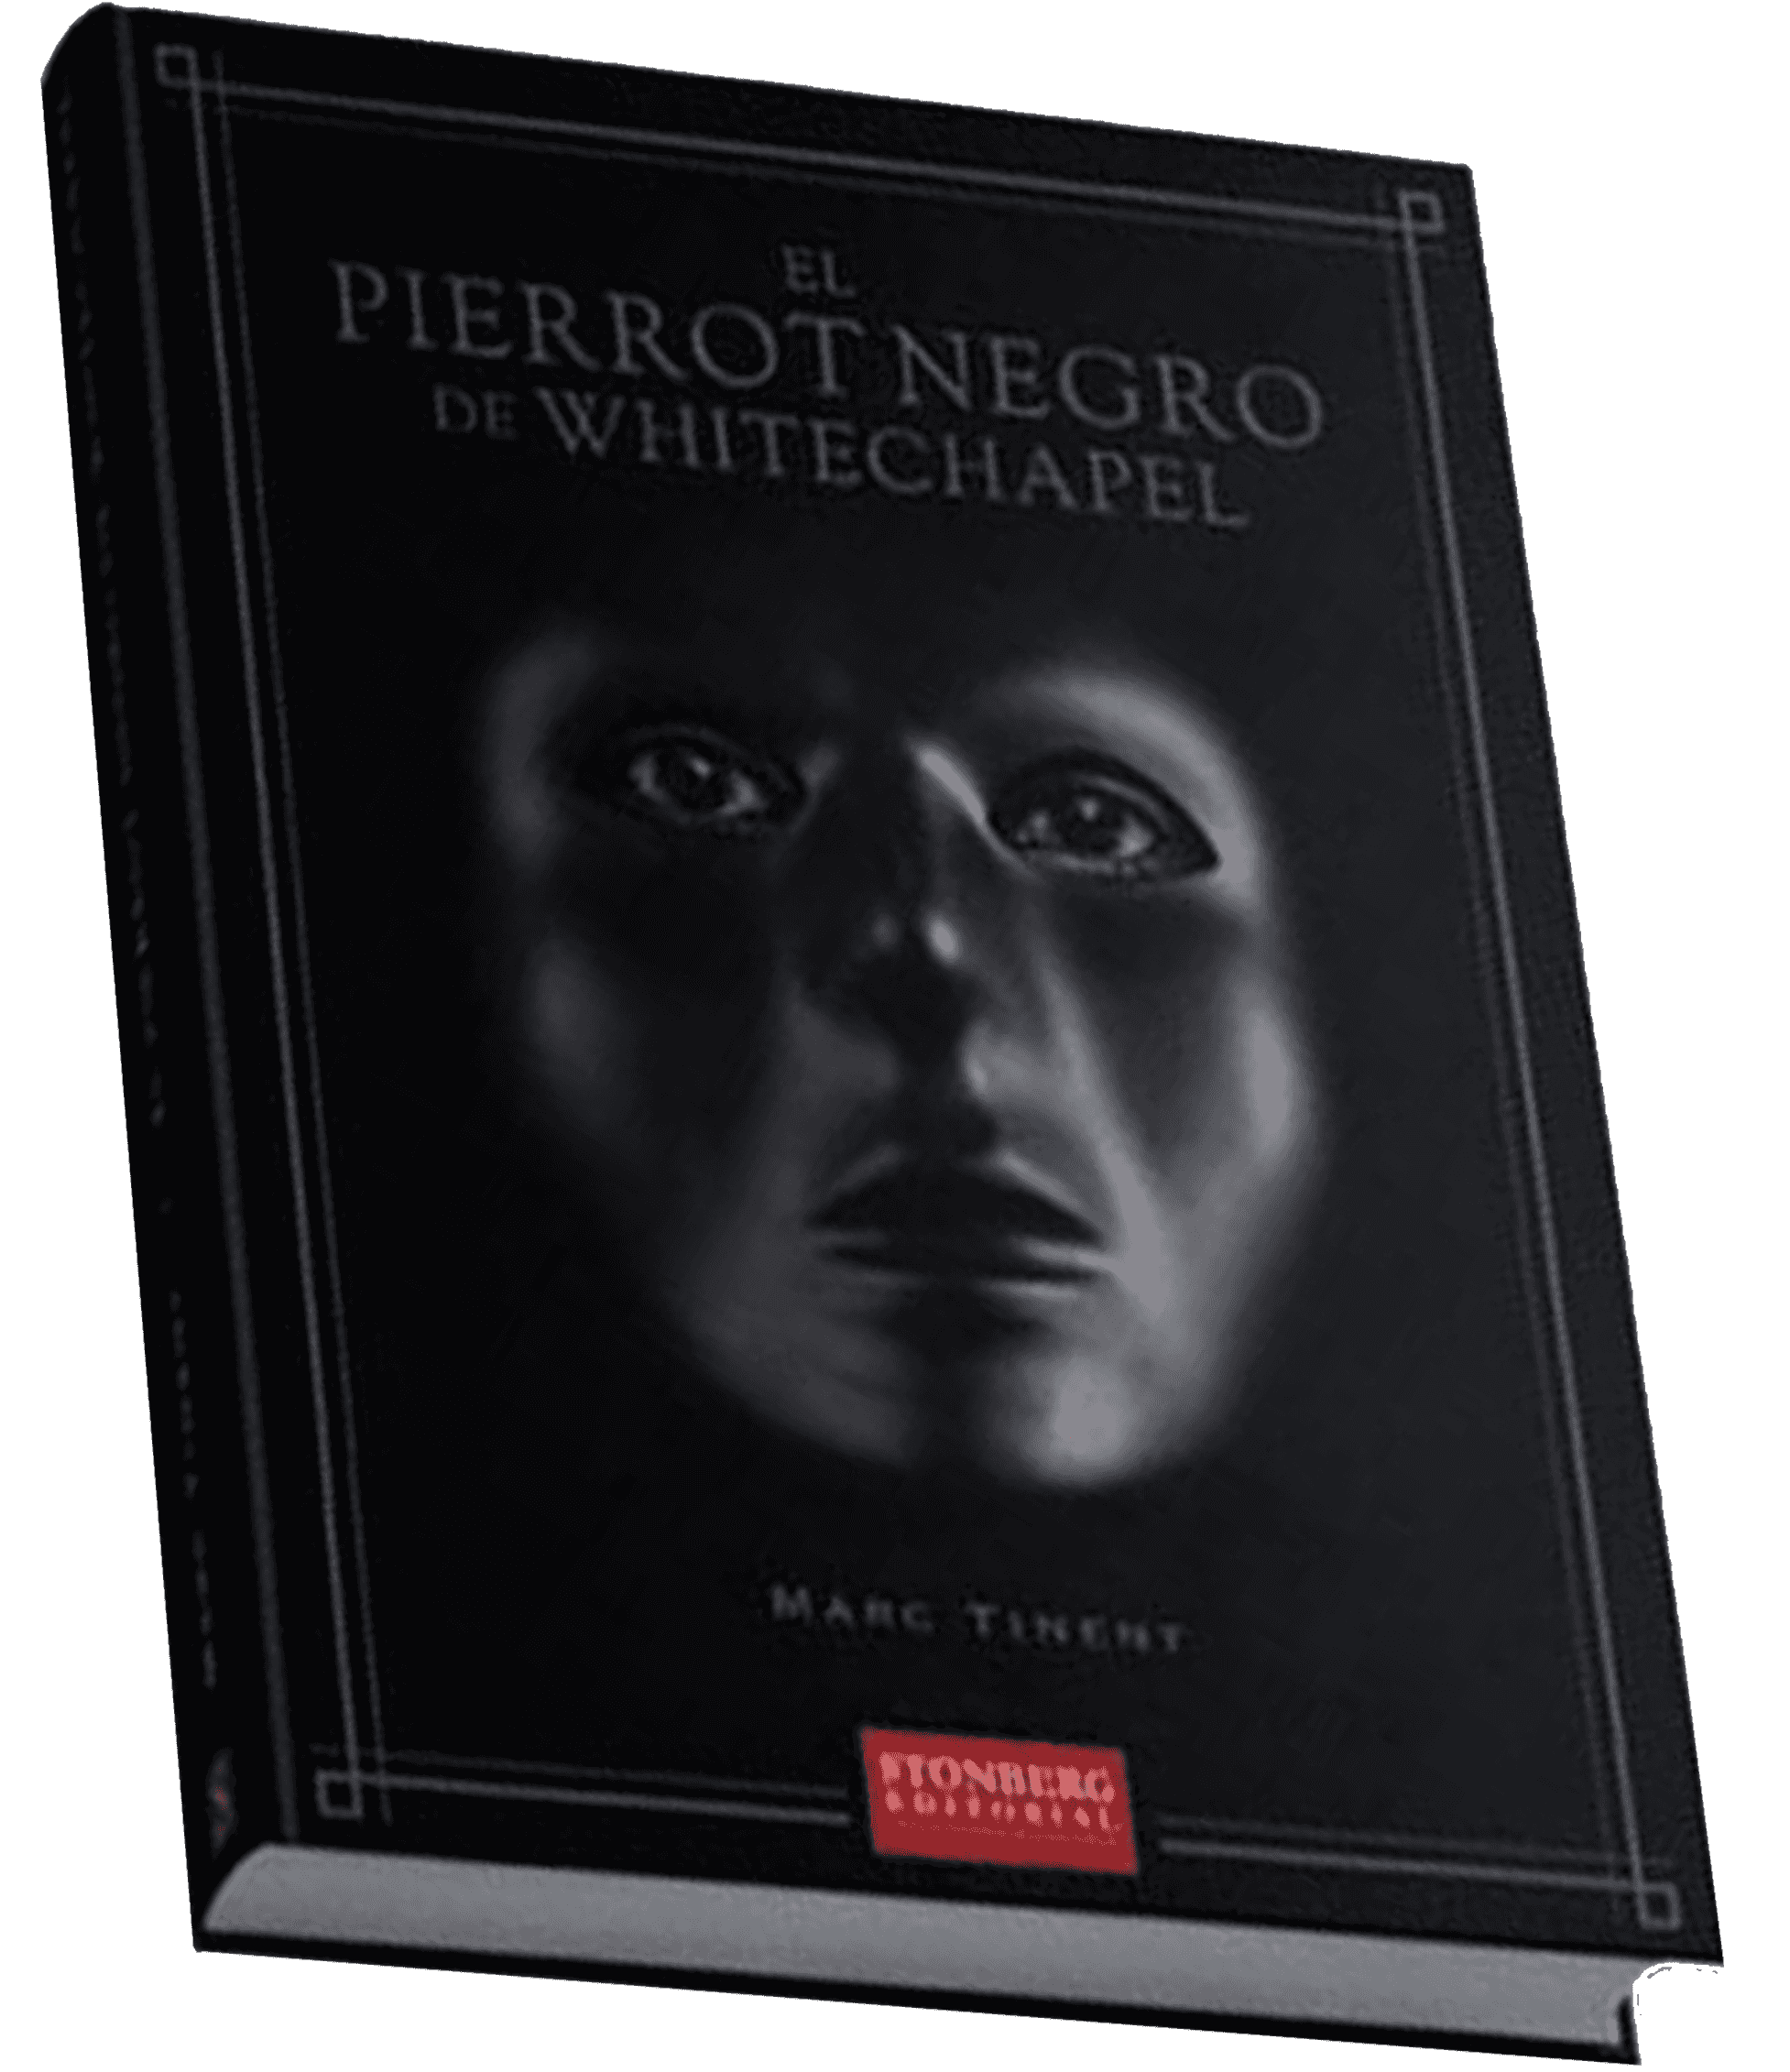 El Pierrot Negro de Whitechapel